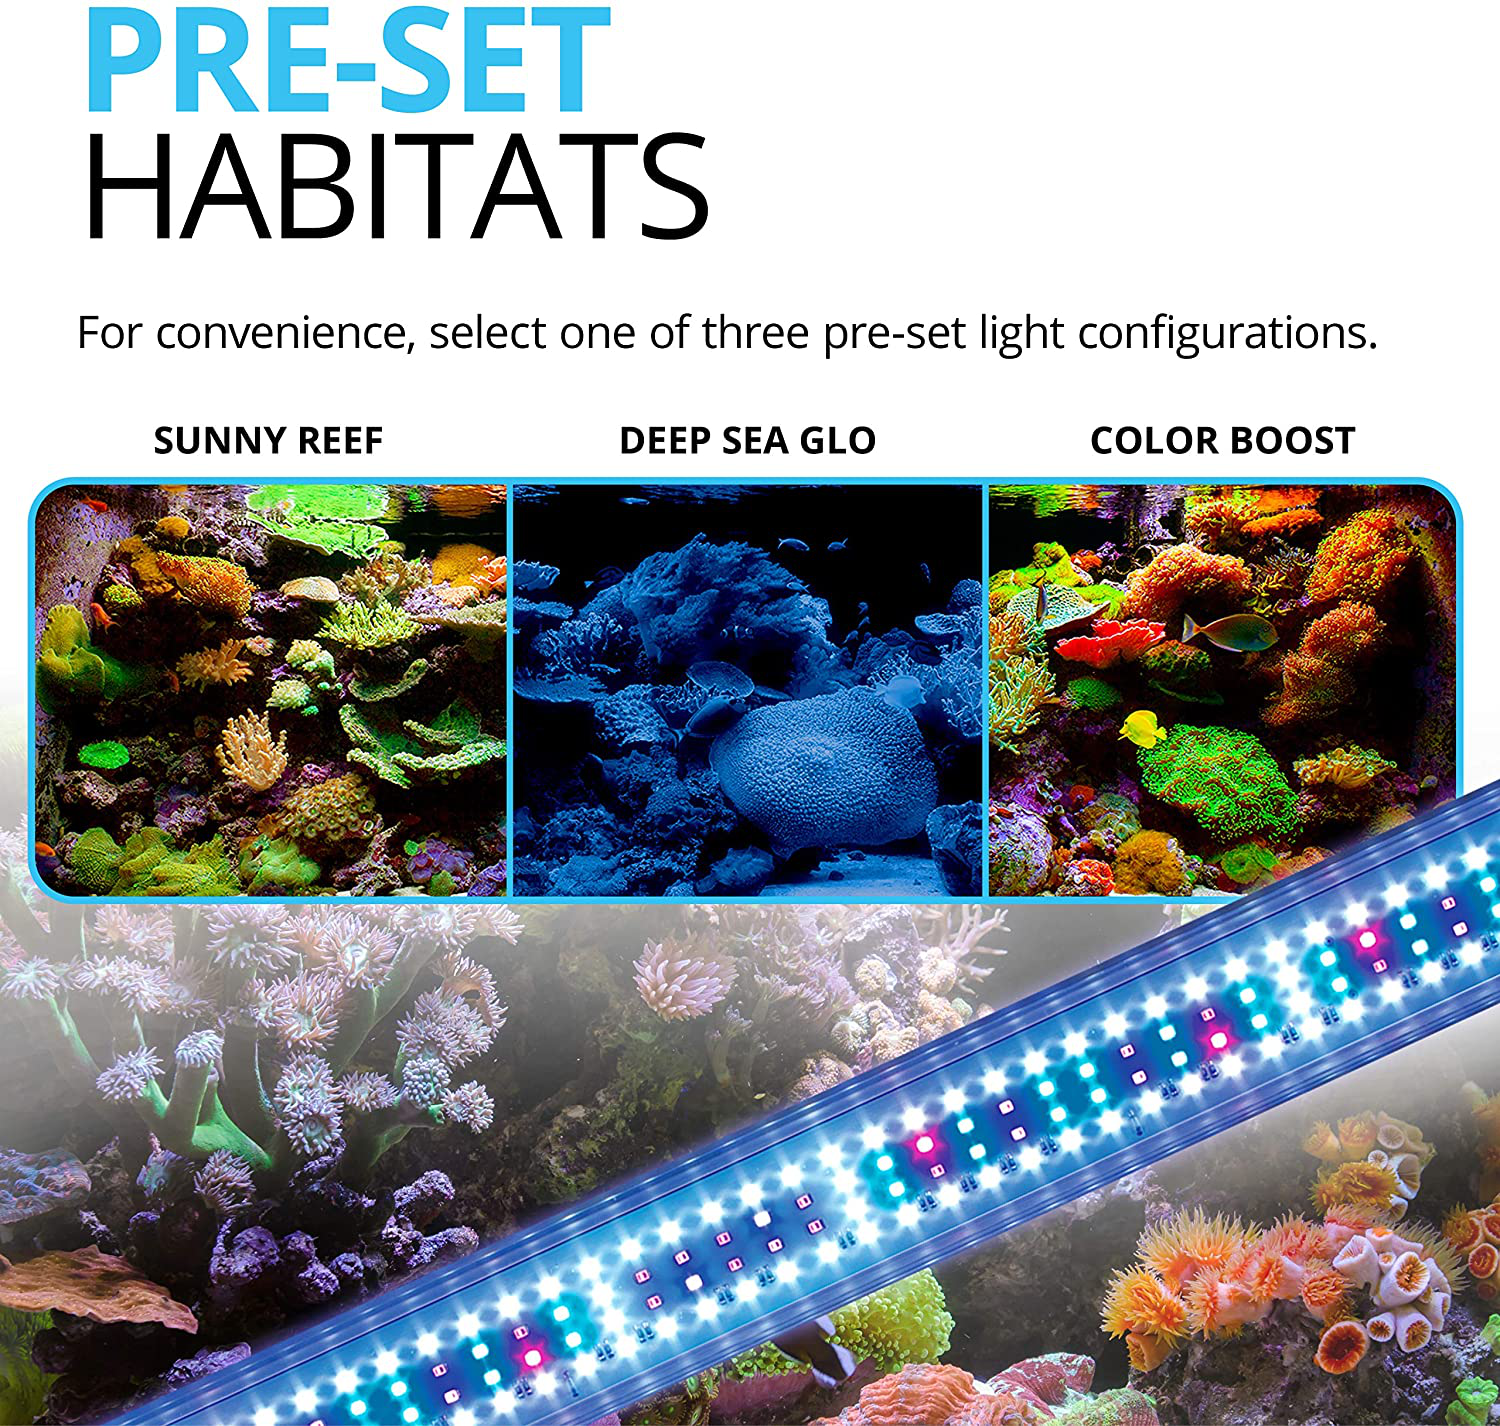 Fluval Sea Marine 3.0 LED Aquarium Lighting for Coral Growth, 59 Watts, 48-60 Inches